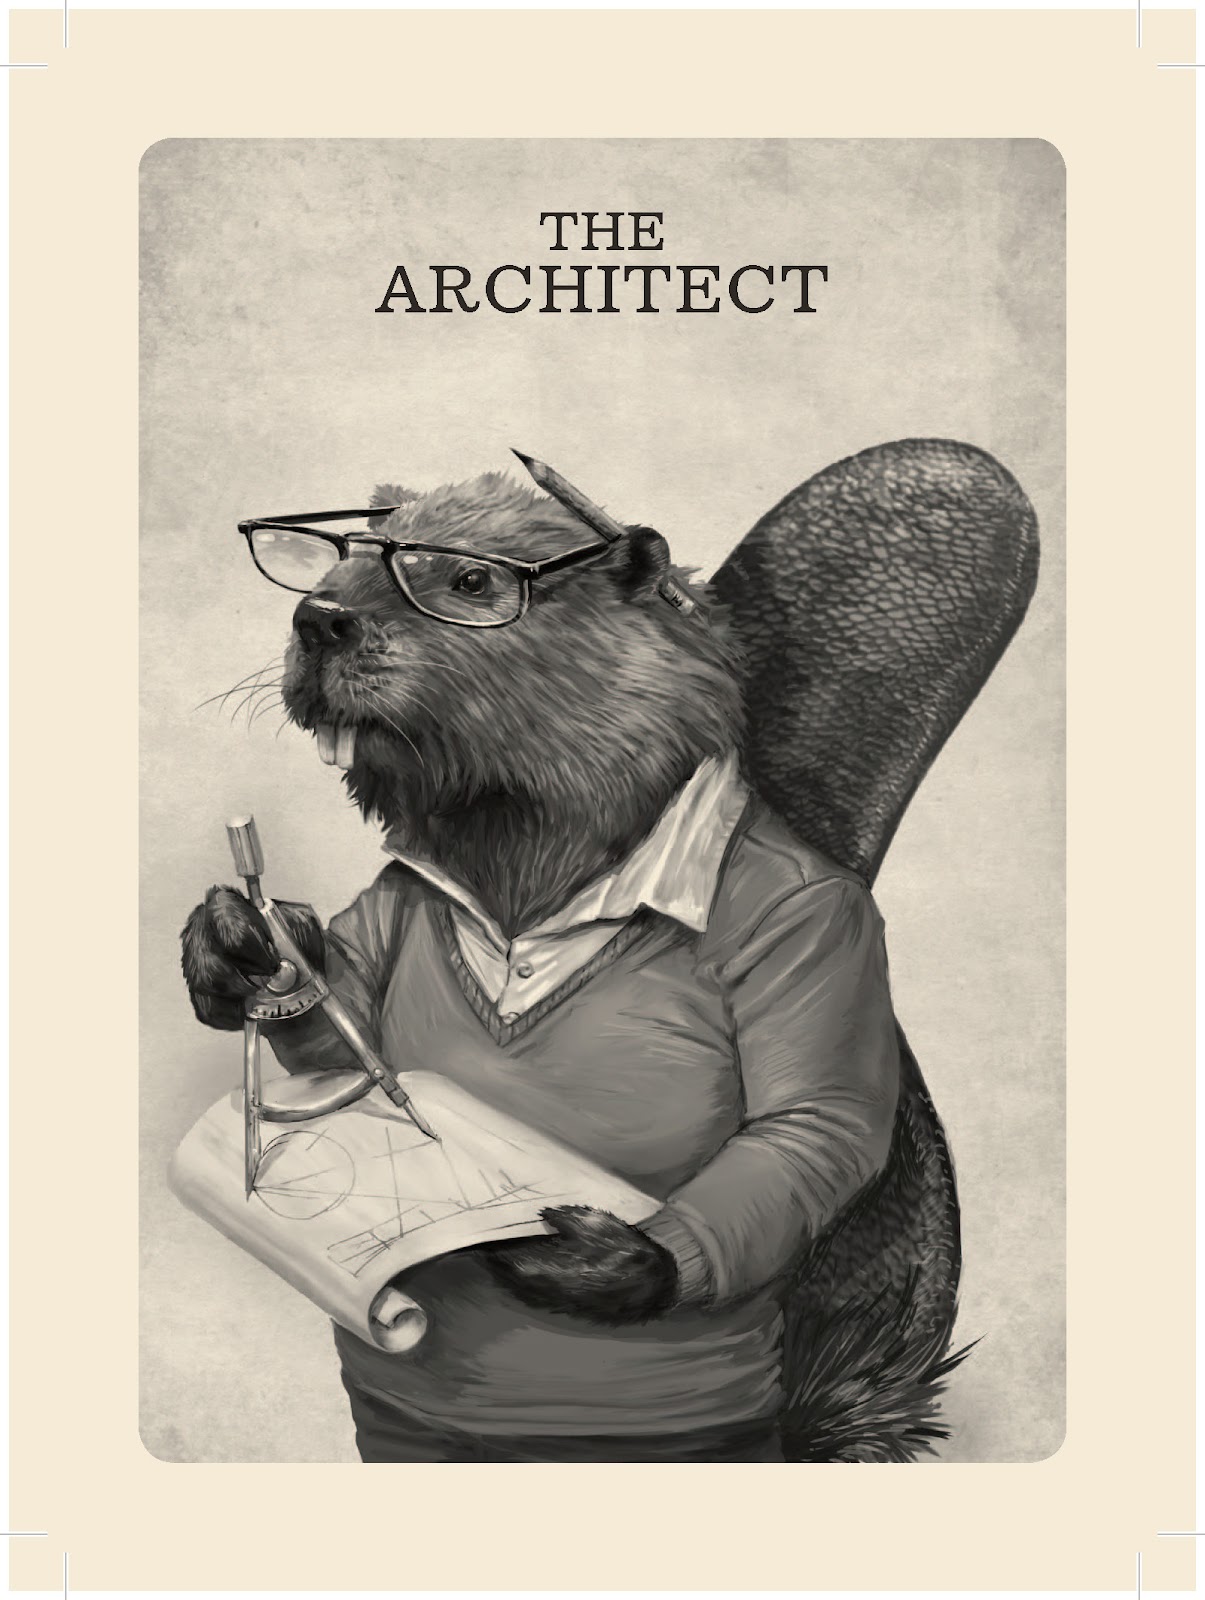 The Architect Archetype